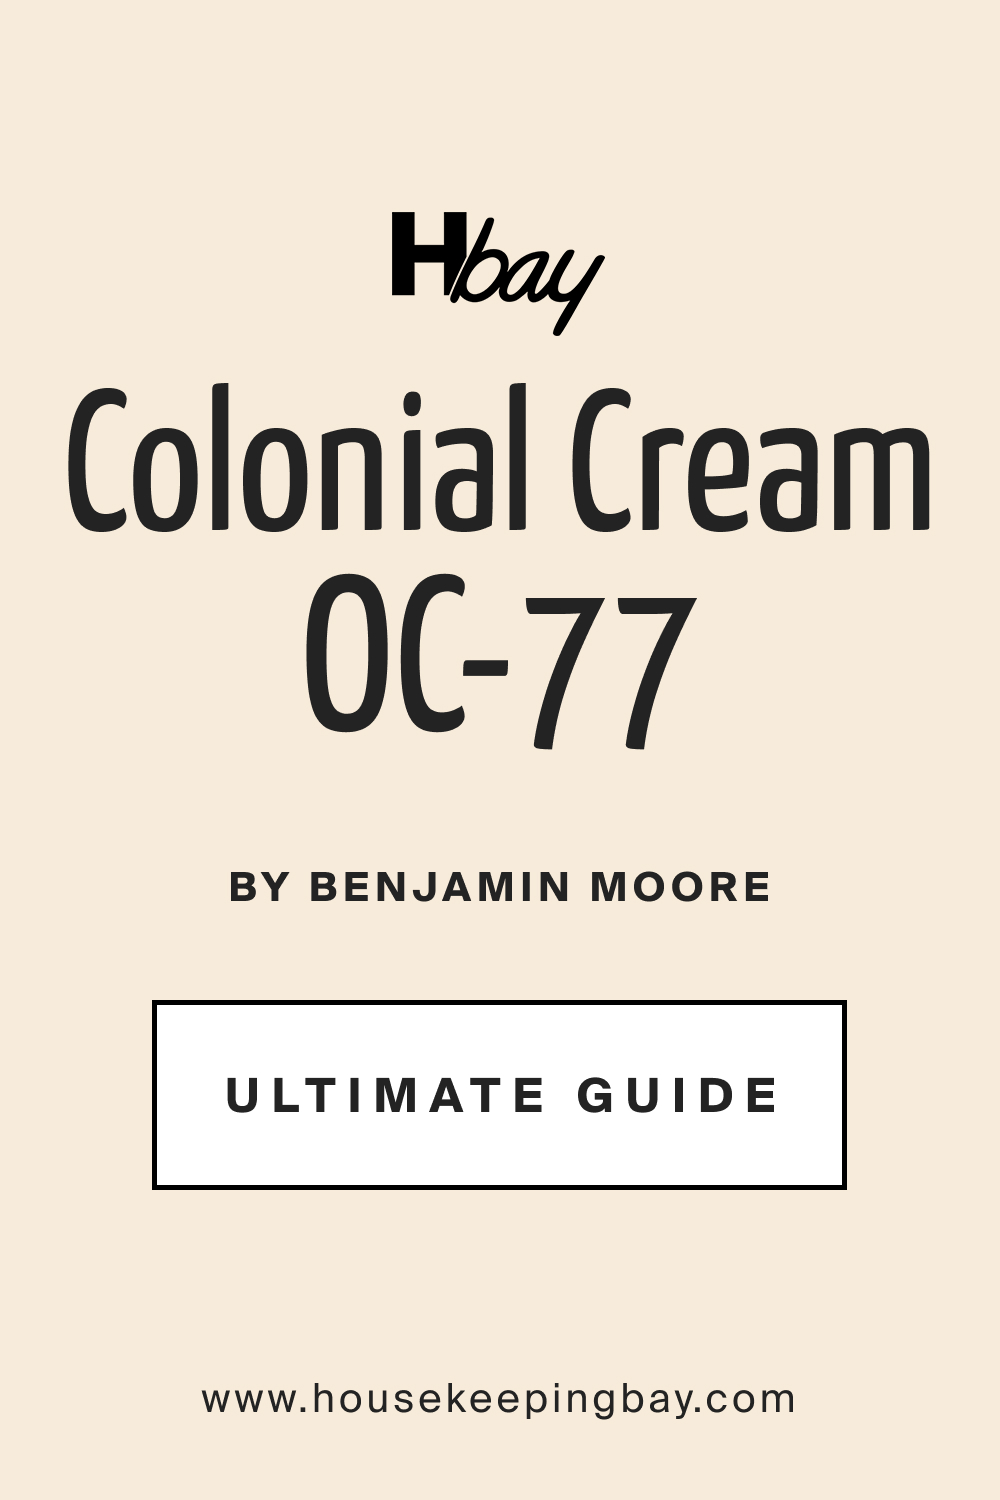 Colonial Cream OC 77 by Benjamin Moore Ultimate Guide